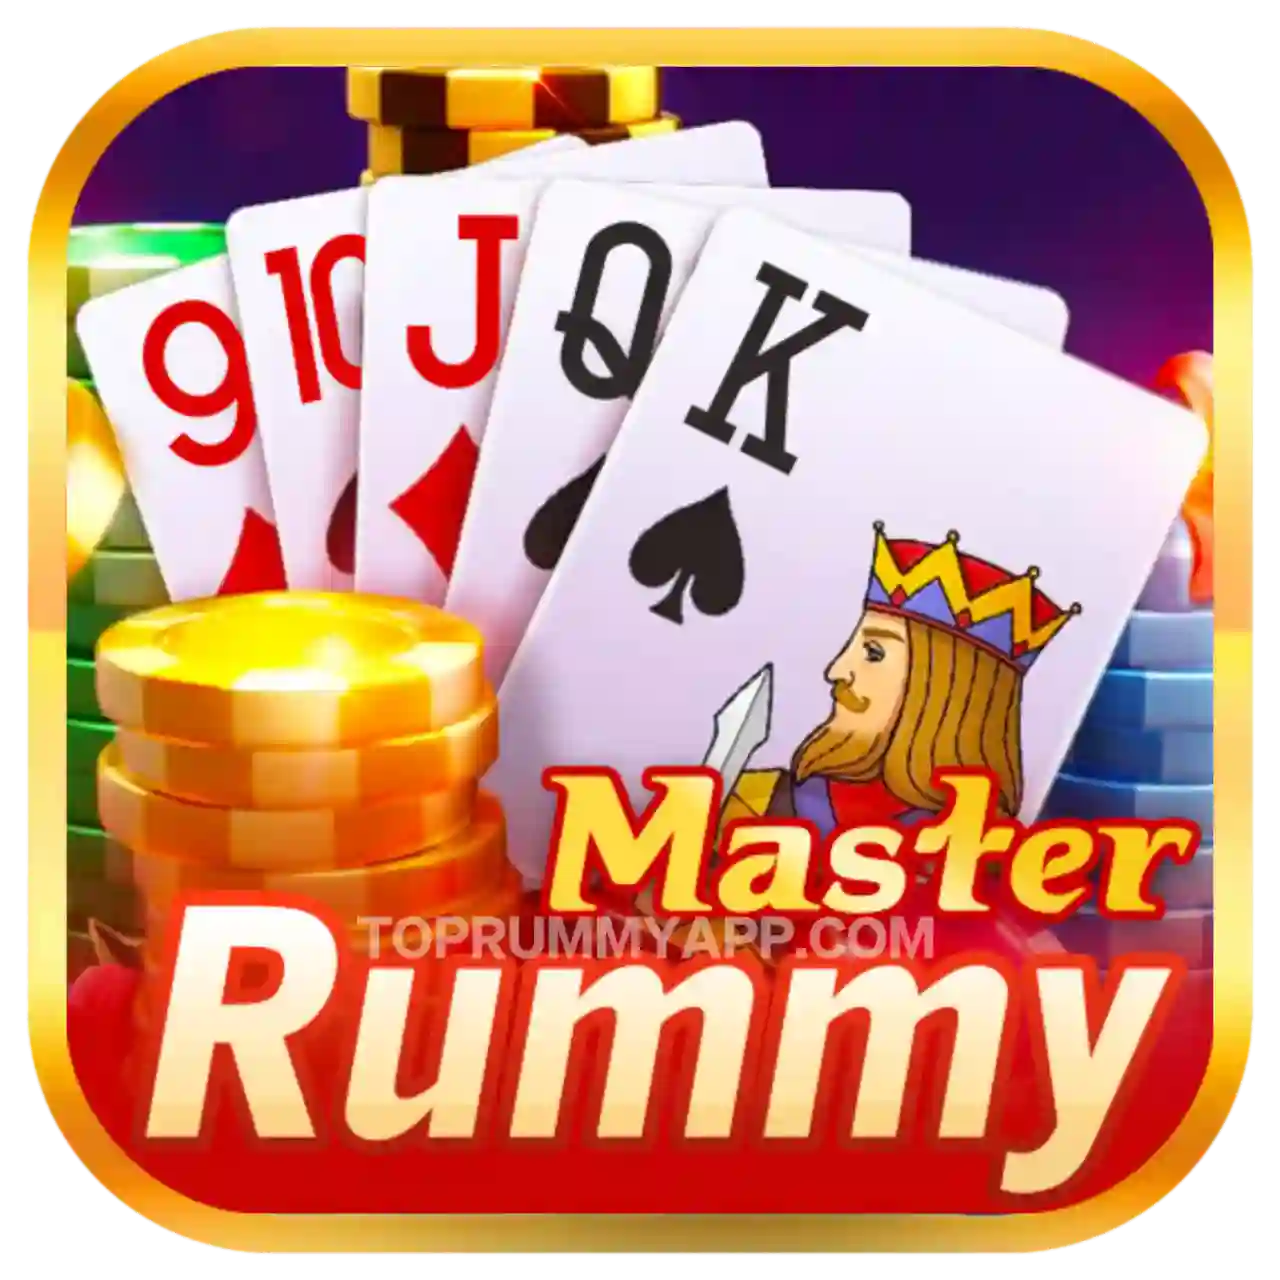 Rummy Master Apk Download - All Rummy App List